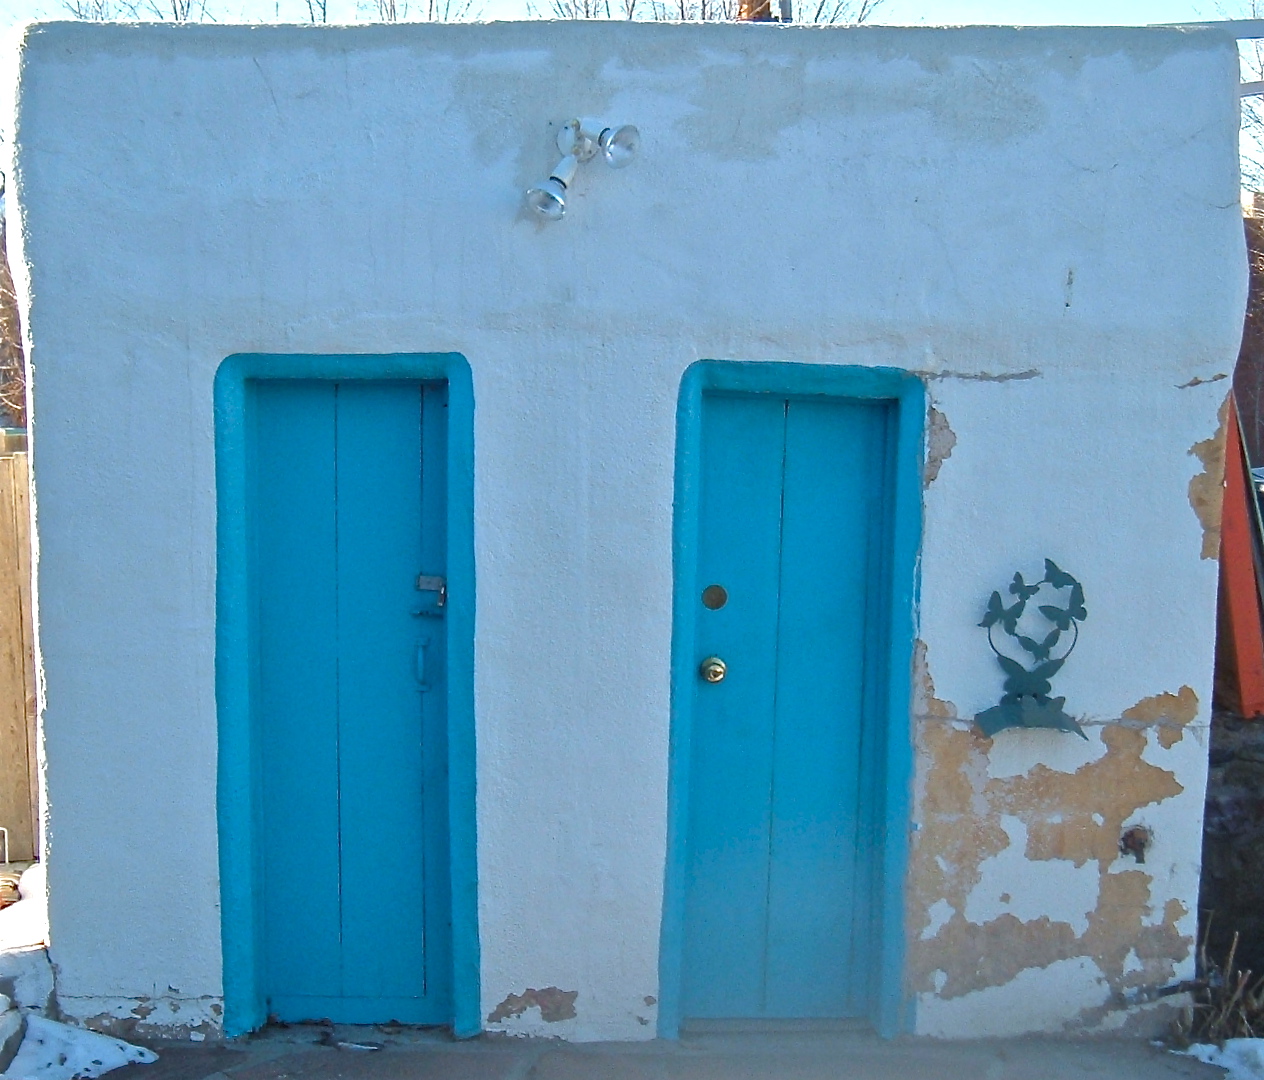 Two Graces Taos: “The Secret of Taos Blue Doors” Robert Cafazzo ...